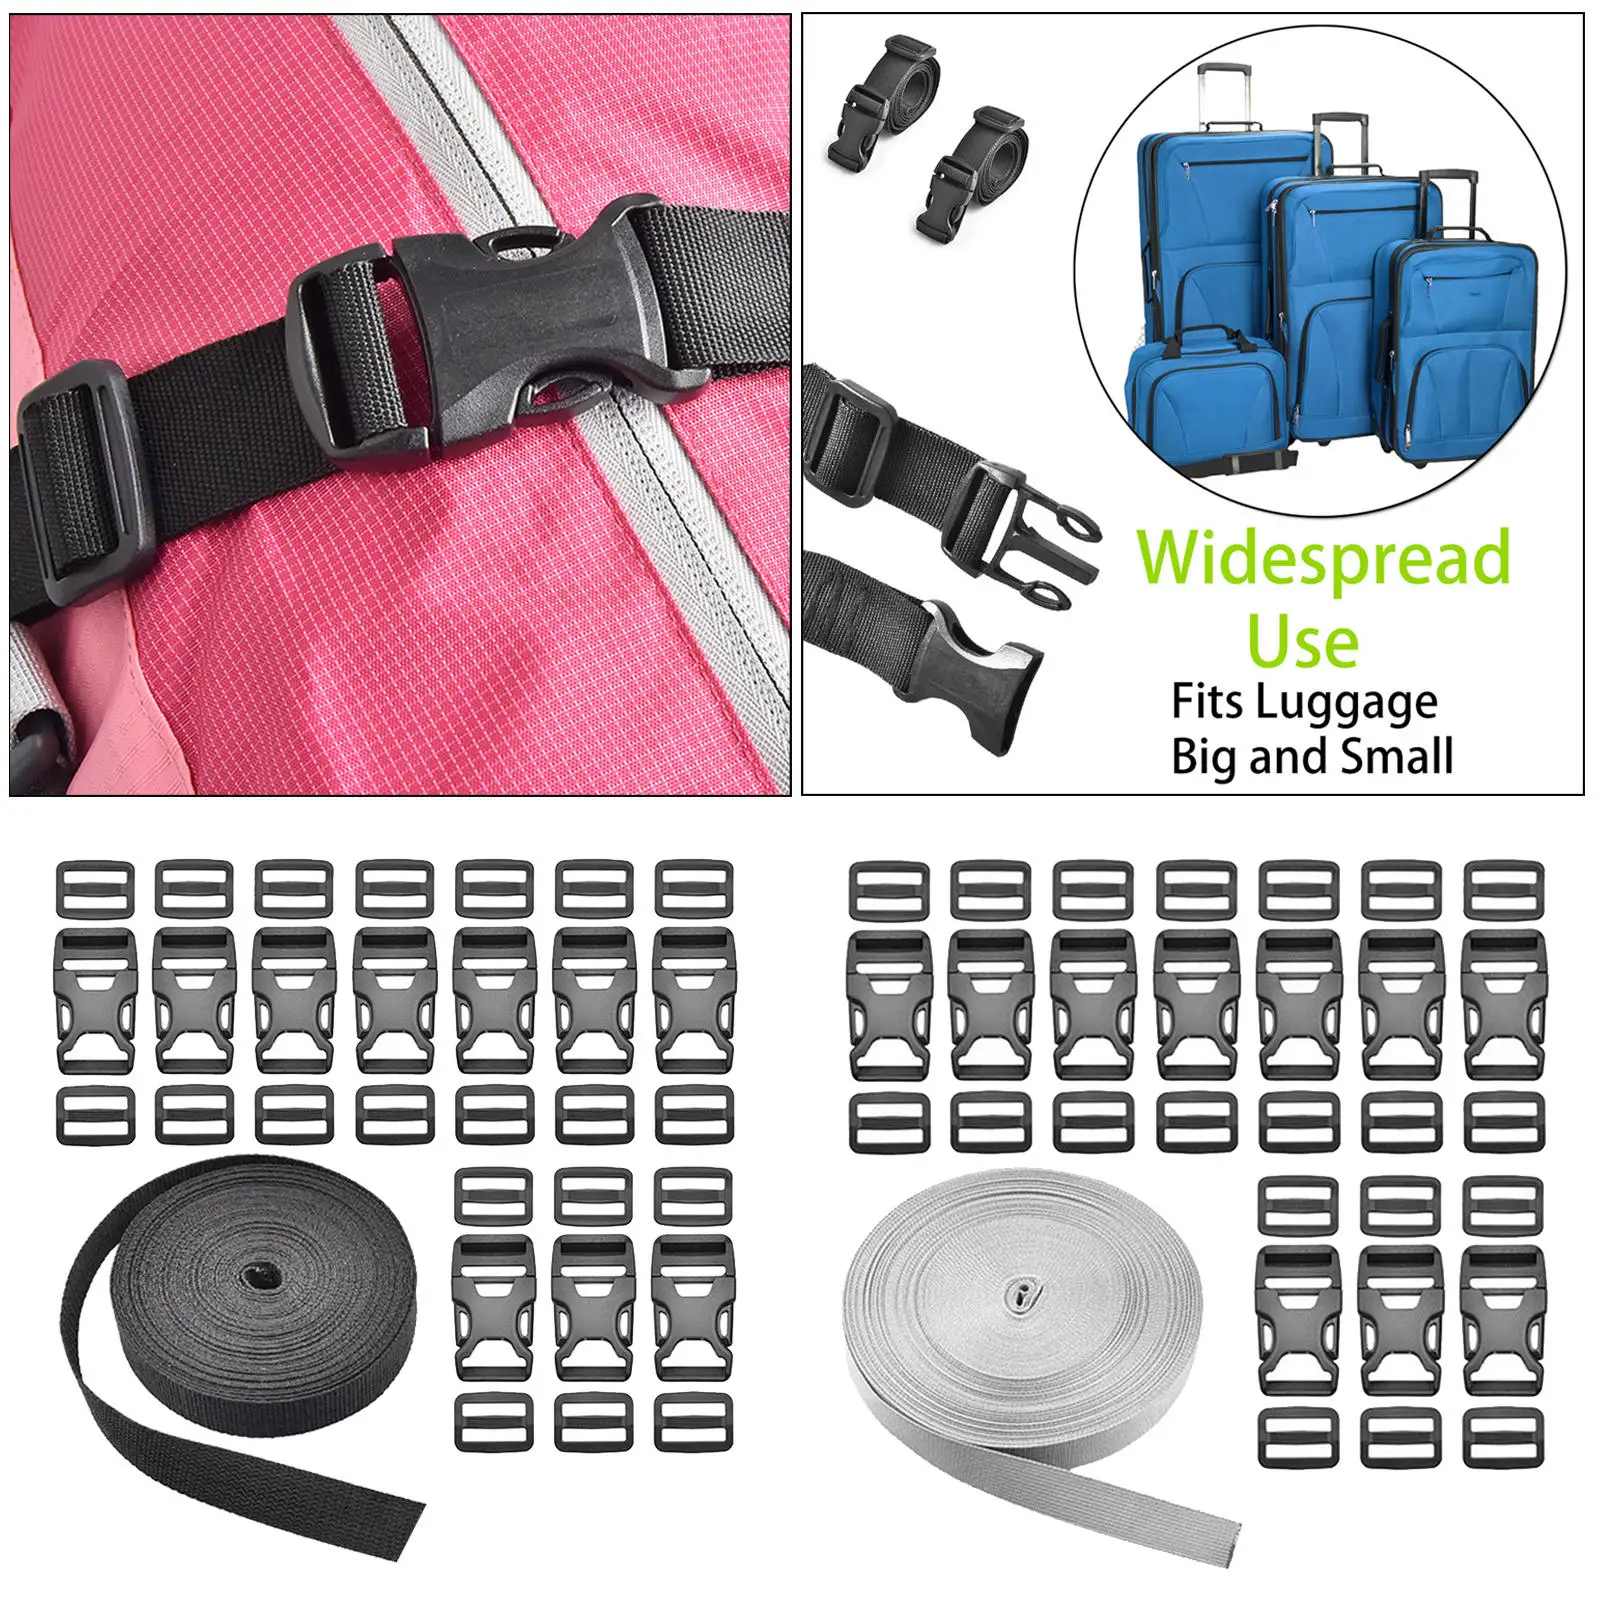 Adjustable Tie Down Straps, Lashing Straps, Adjustable Buckle Tie-Down Straps for Motorcycle, Cargo, Truck,Trailer, Luggage